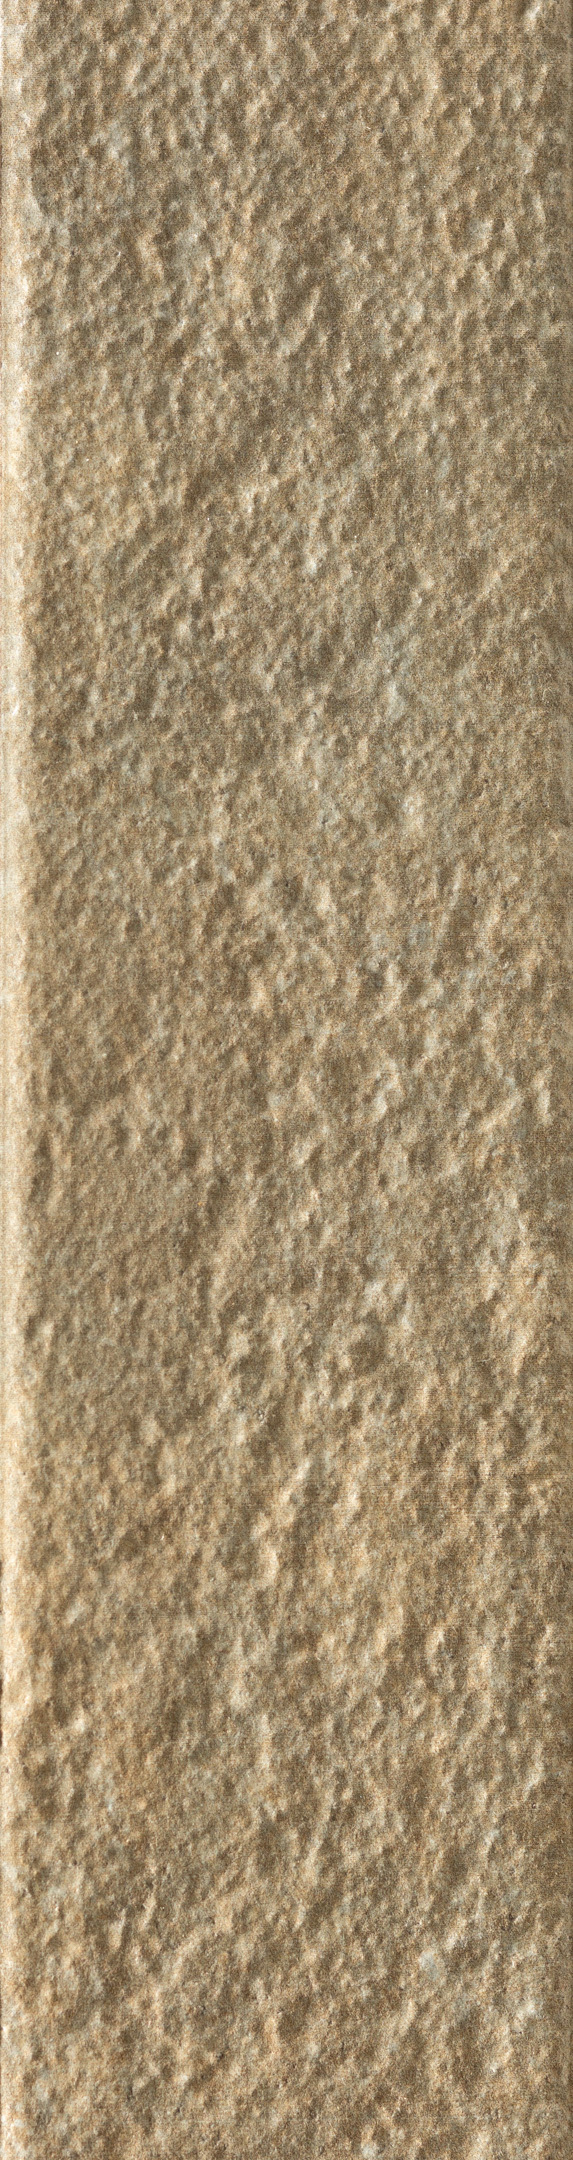 фото Клинкерная плитка керамин теннесси 2 светло-бежевая 24,5х6,5 см (34 шт.=0,54 кв.м)